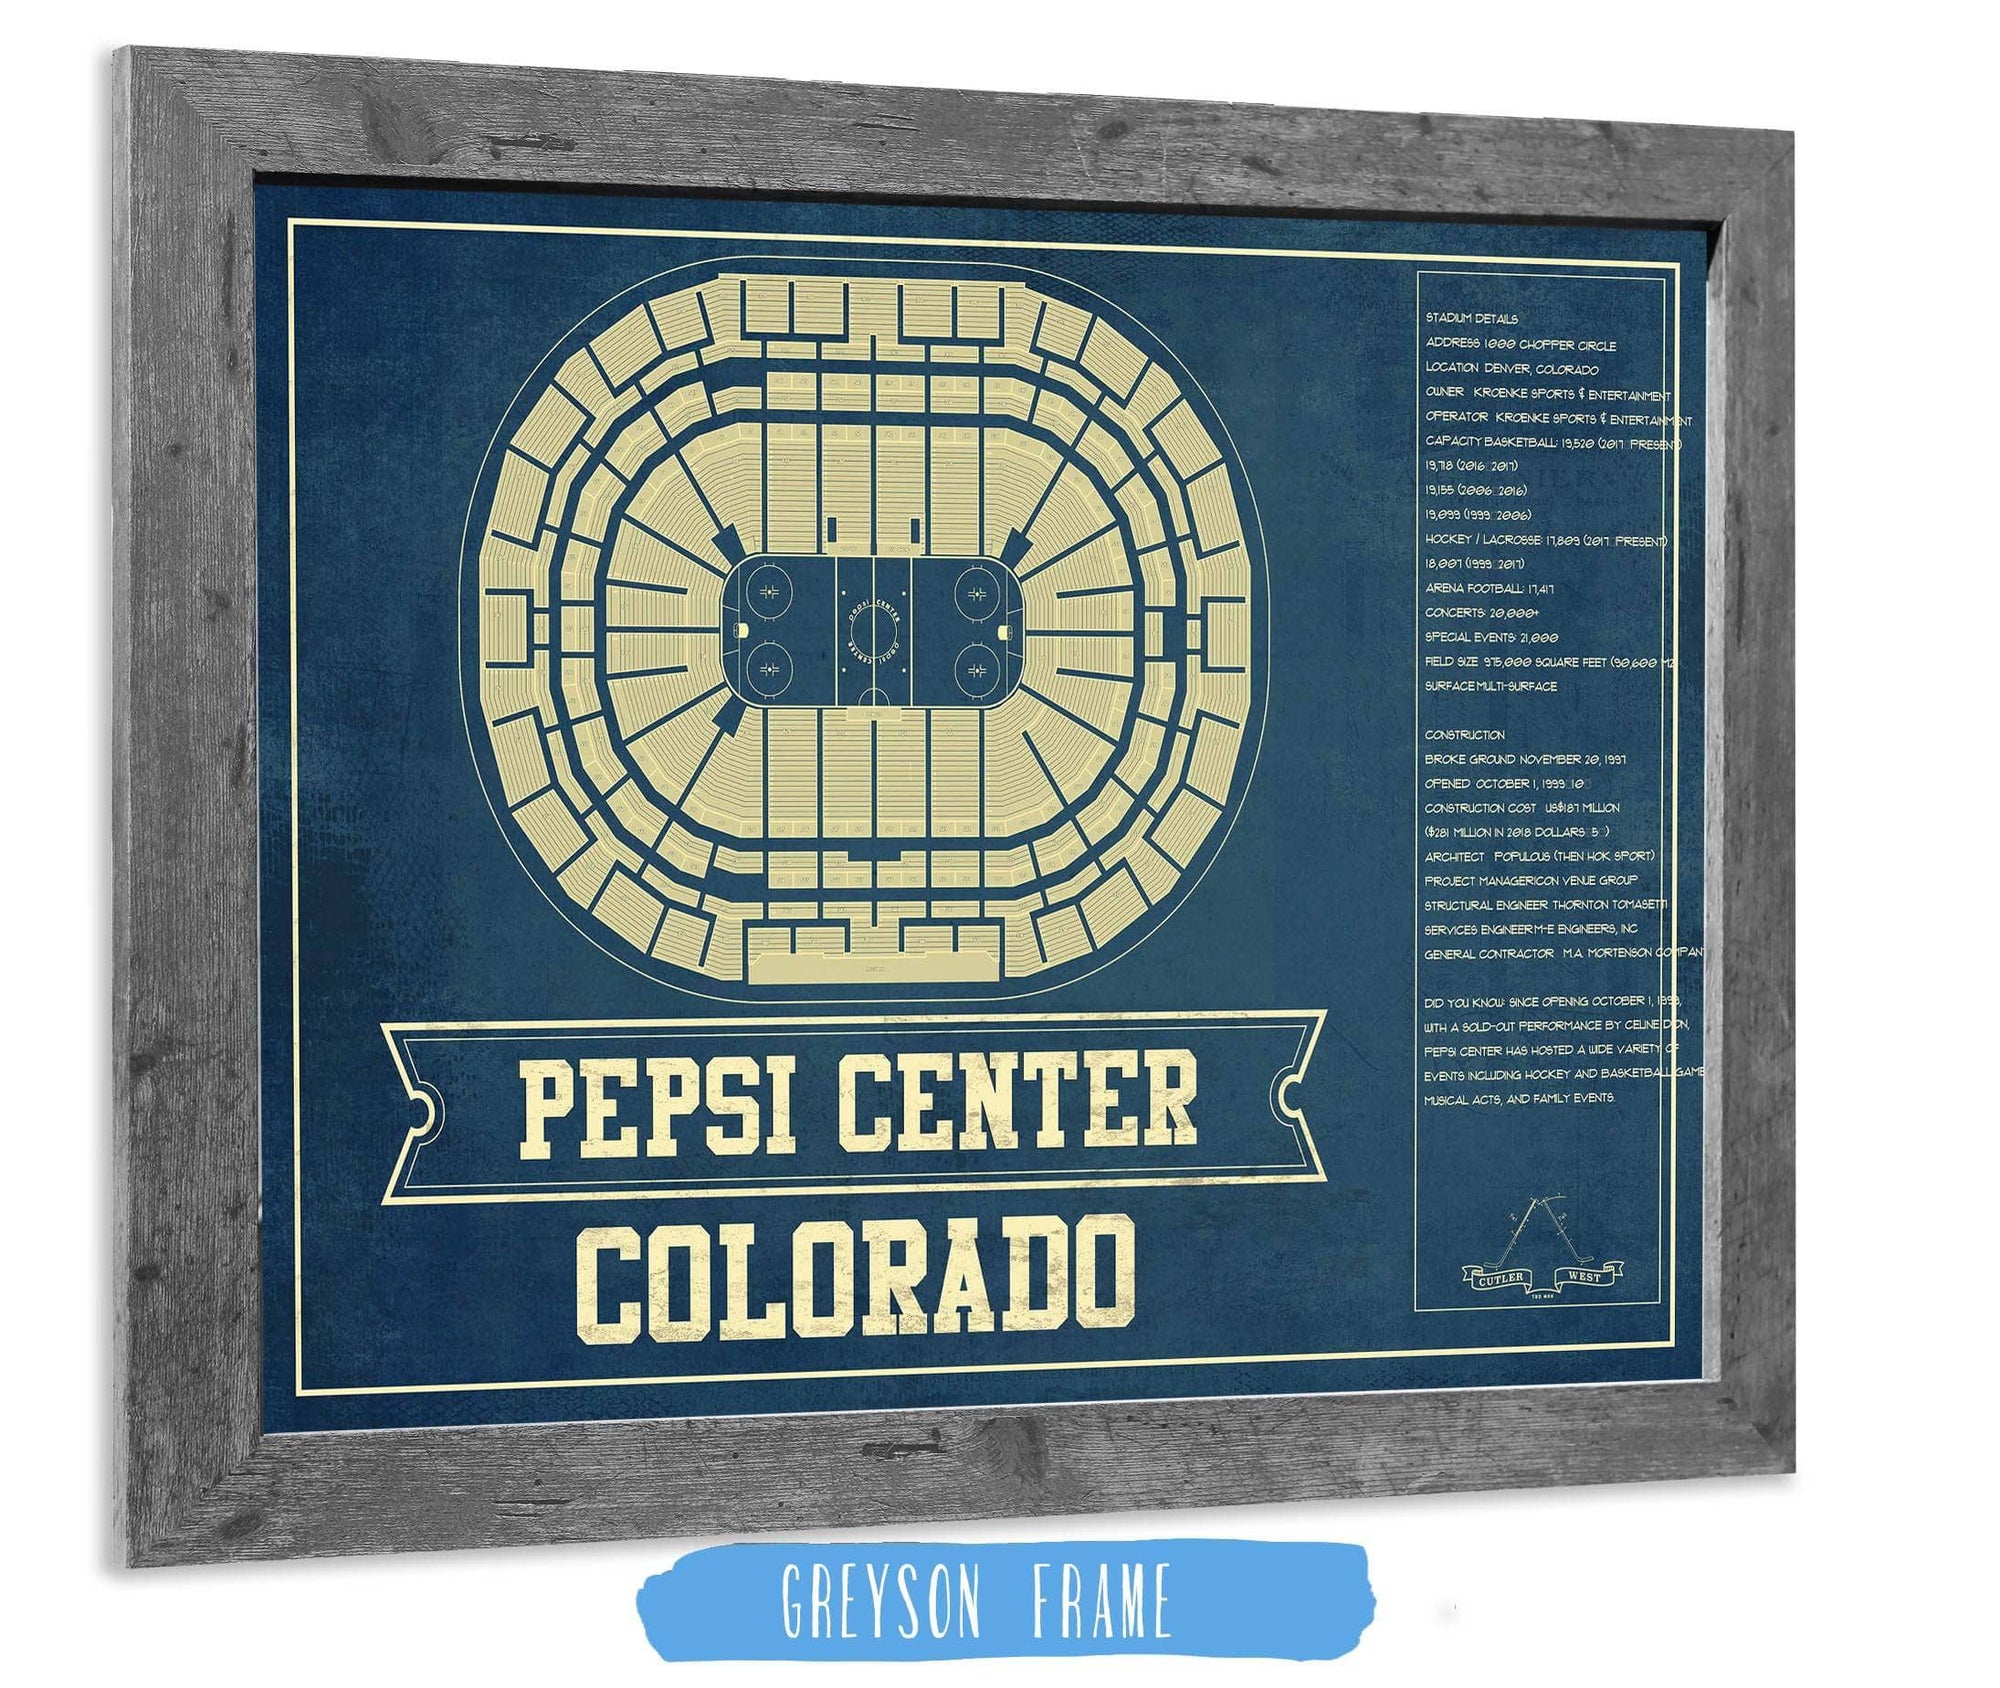 Cutler West 14" x 11" / Greyson Frame Colorado Avalanche Pepsi Center Seating Chart - Vintage Hockey Print 673820545_79144